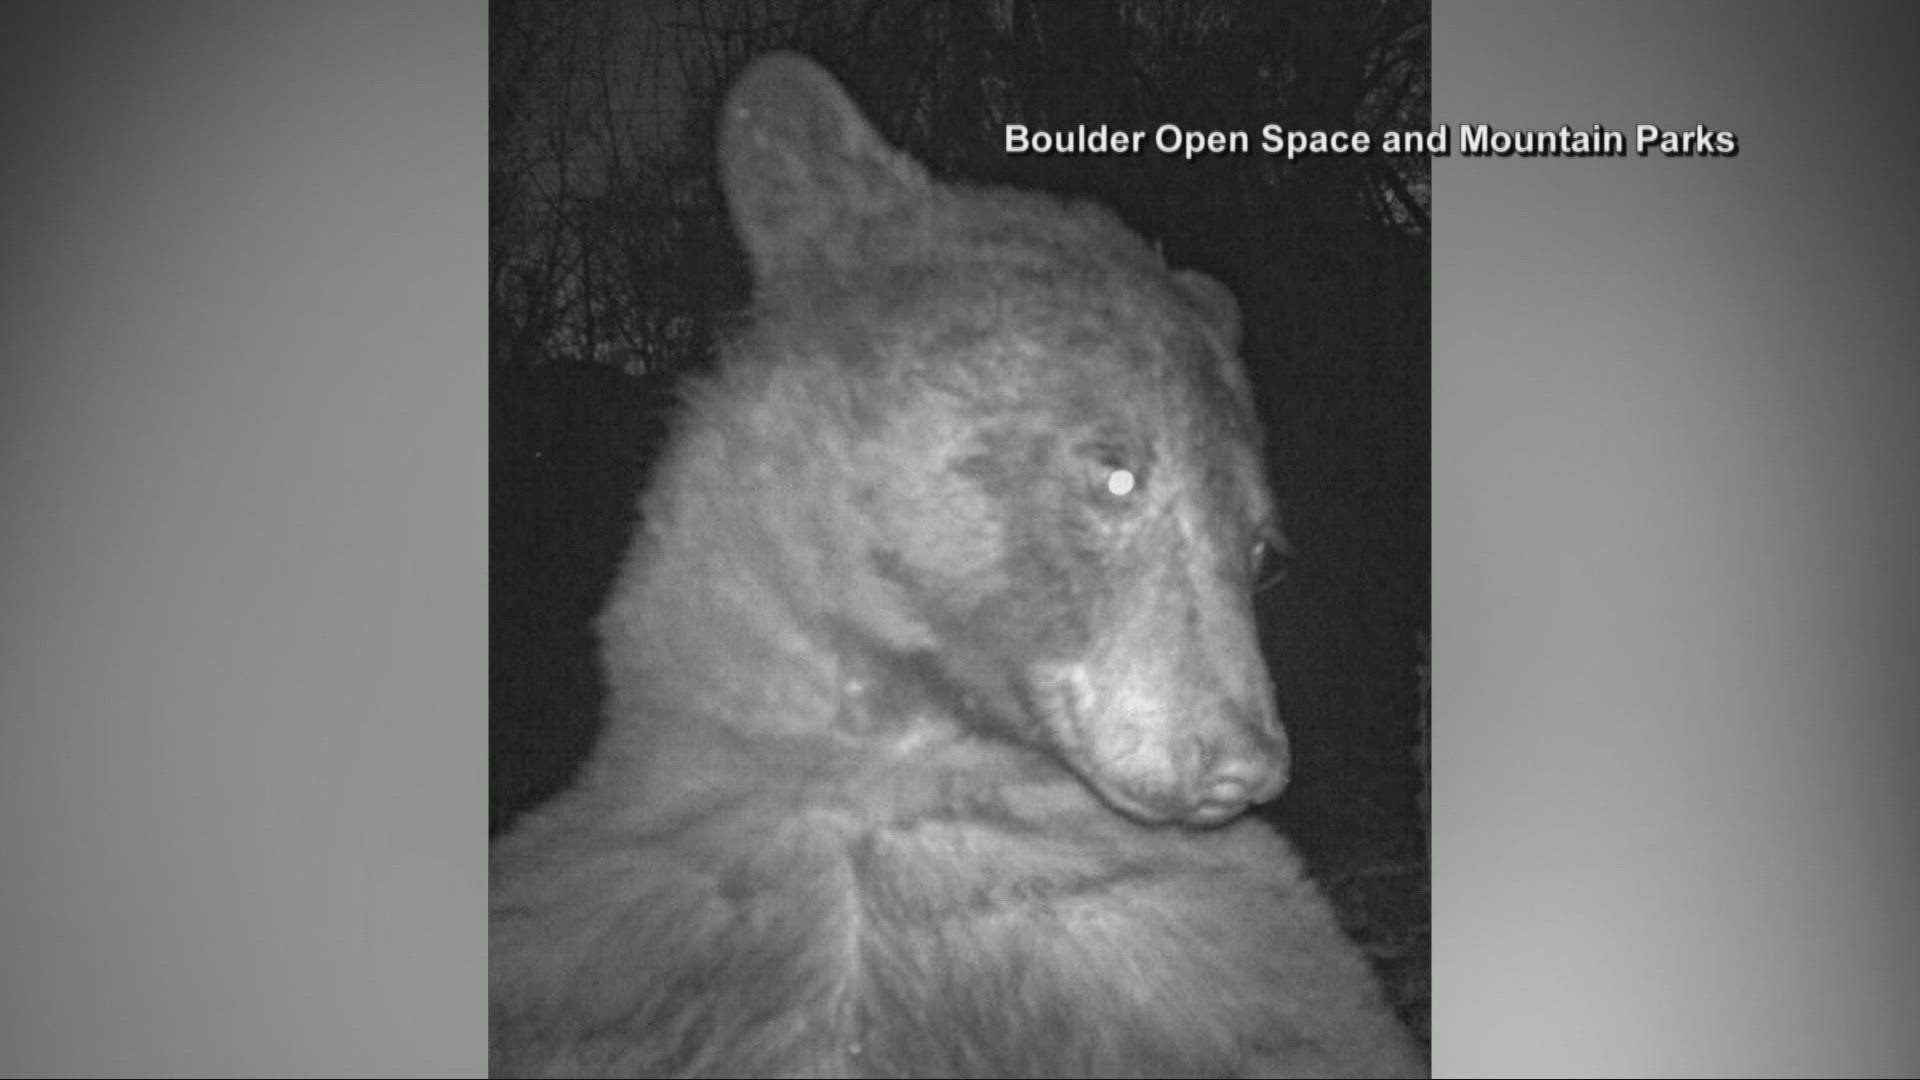 A bear in Boulder, Colorado, found a wildlife camera and posed for hundreds of photos.